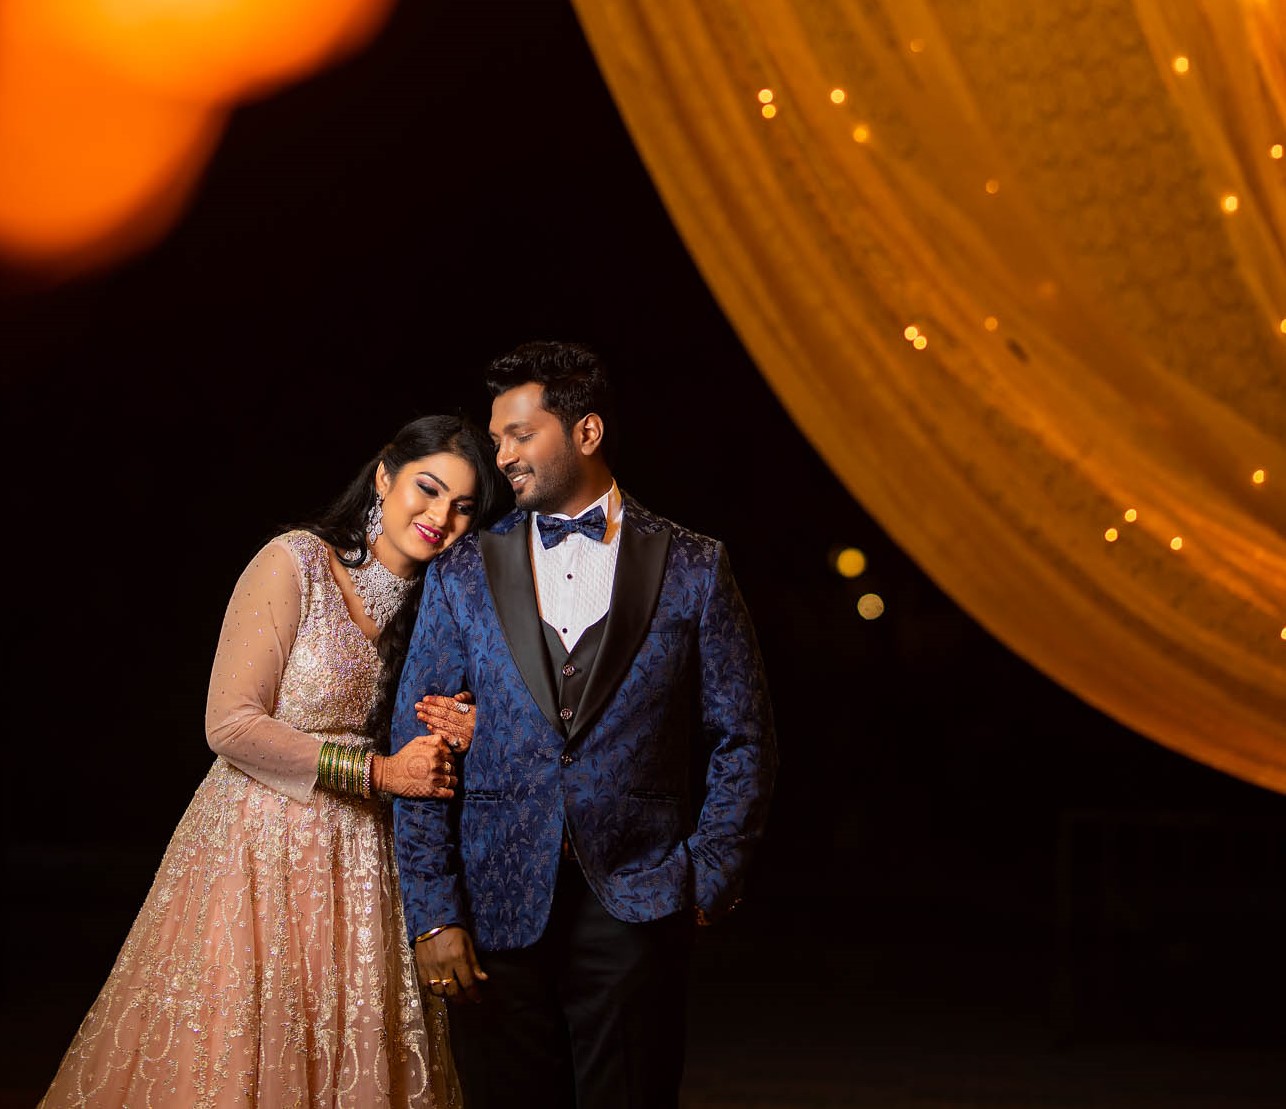 Marathi Couple Wedding Dress Sale Online - www.bridgepartnersllc.com  1692794774